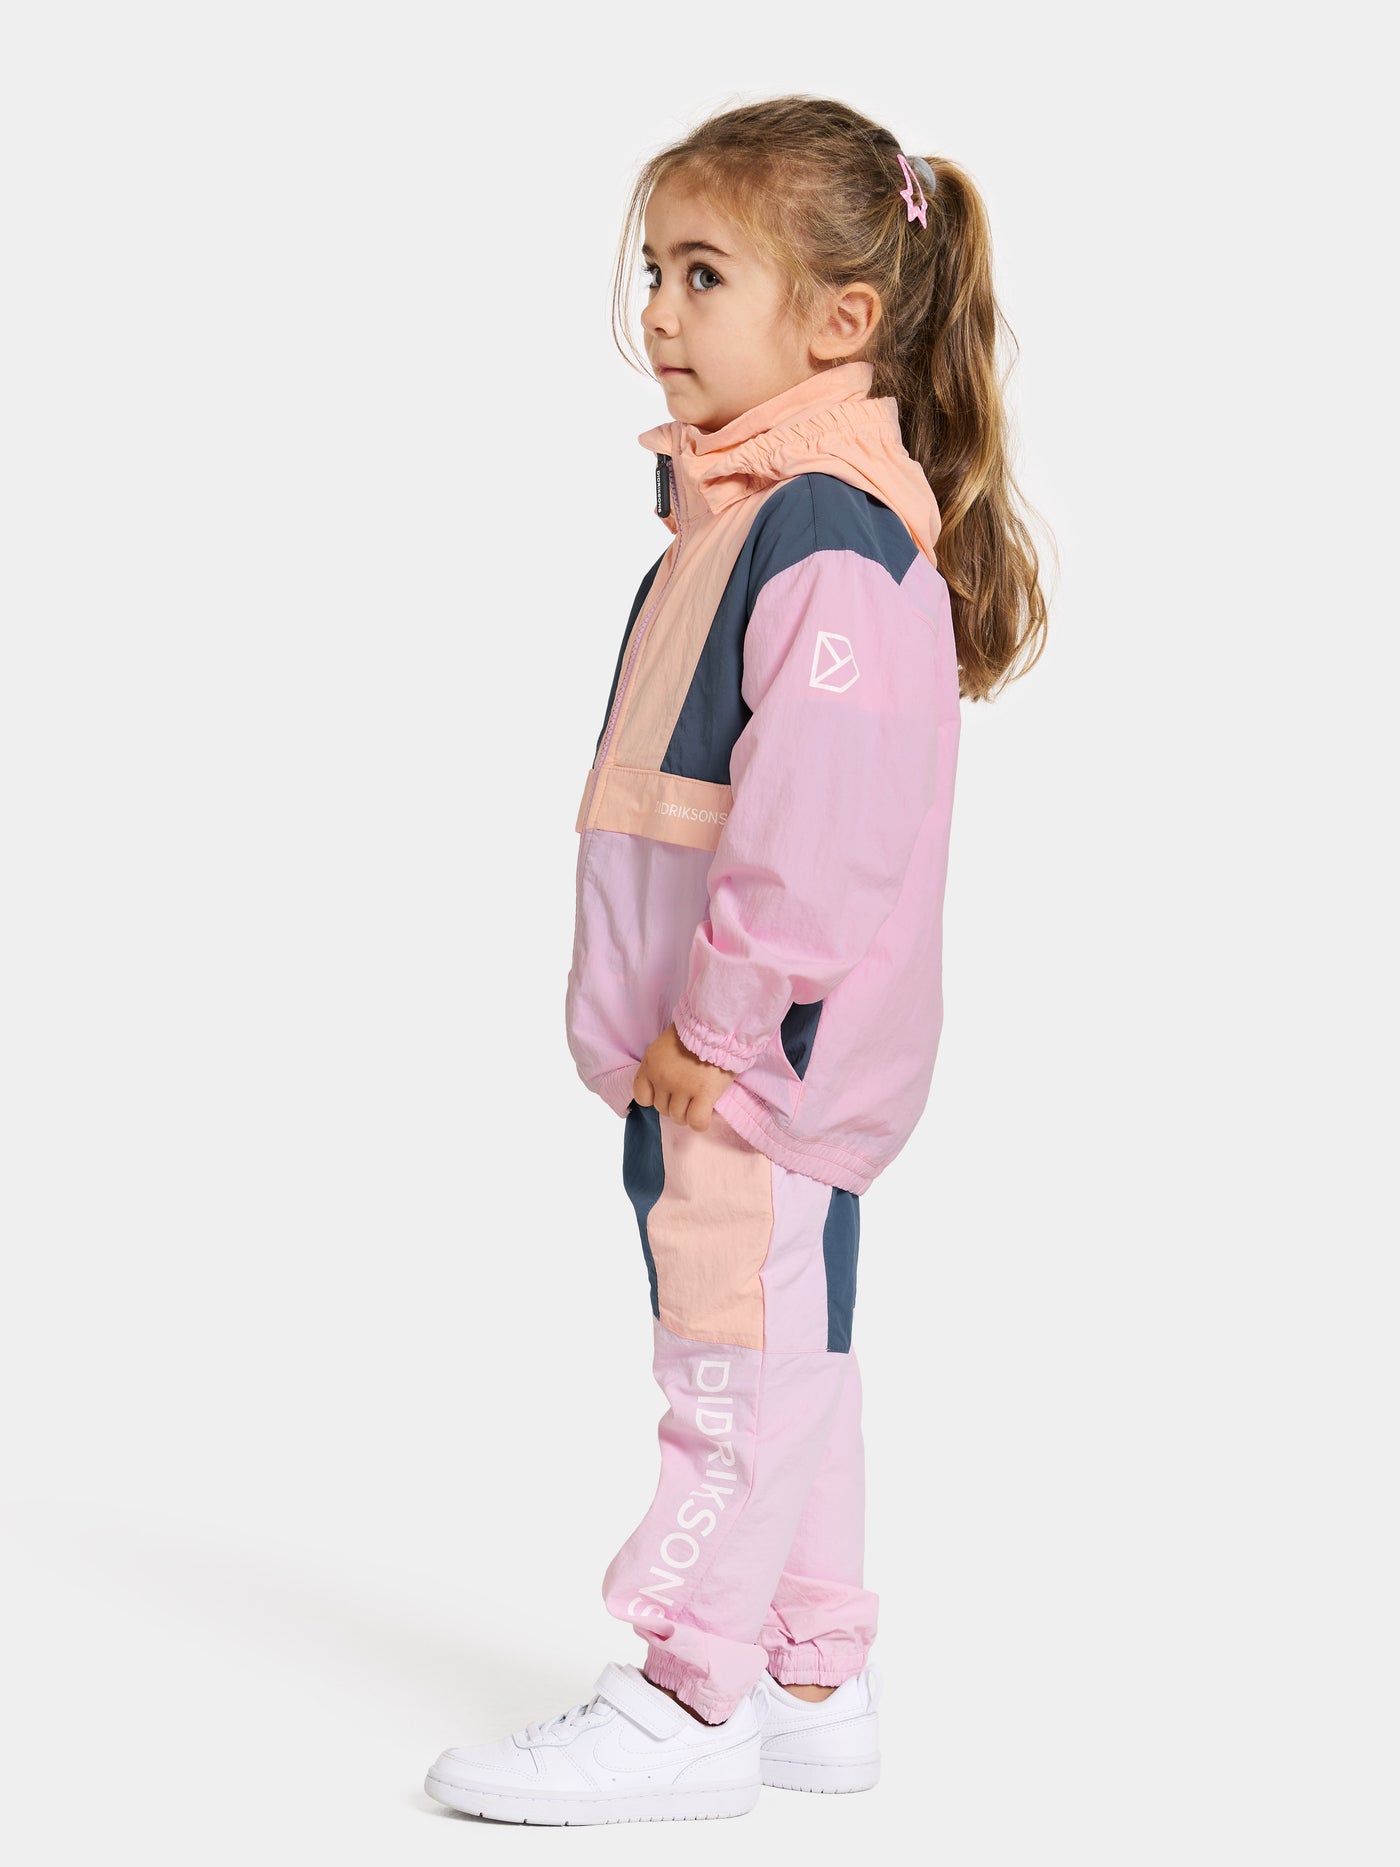 Nypon Kids' Jacket – Windjacke für Kinder